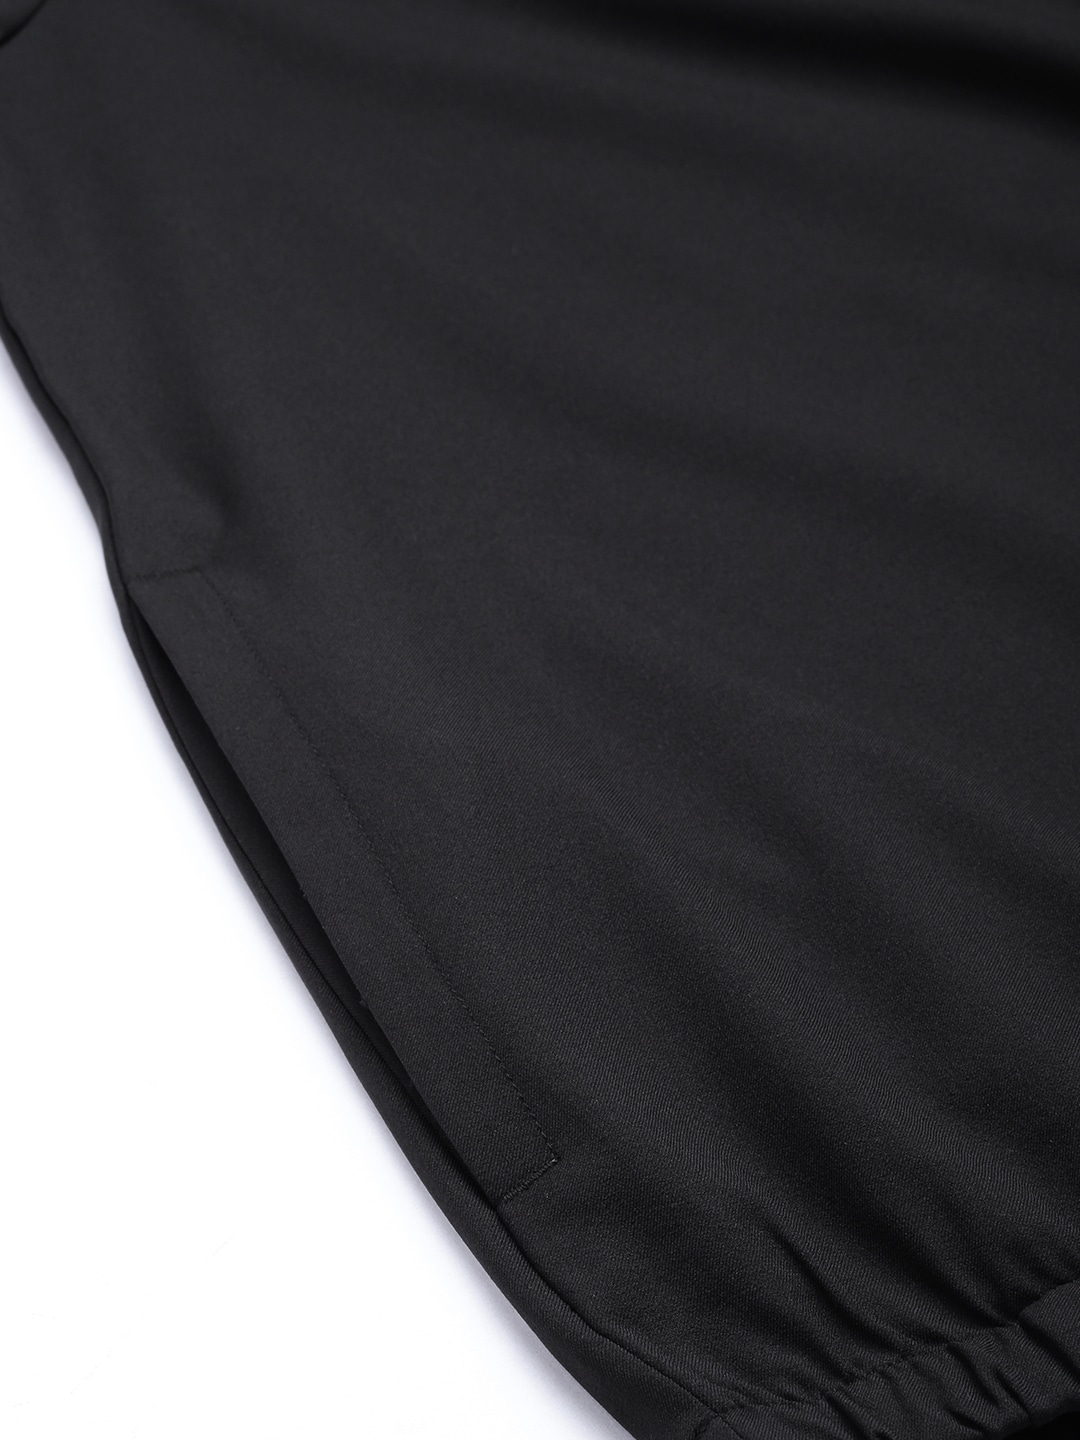 Clothing Tracksuits | HRX By Hrithik Roshan Men Jet Black Colourblock Regular Fit Rapid-Dry Lifestyle Tracksuits - JT12121